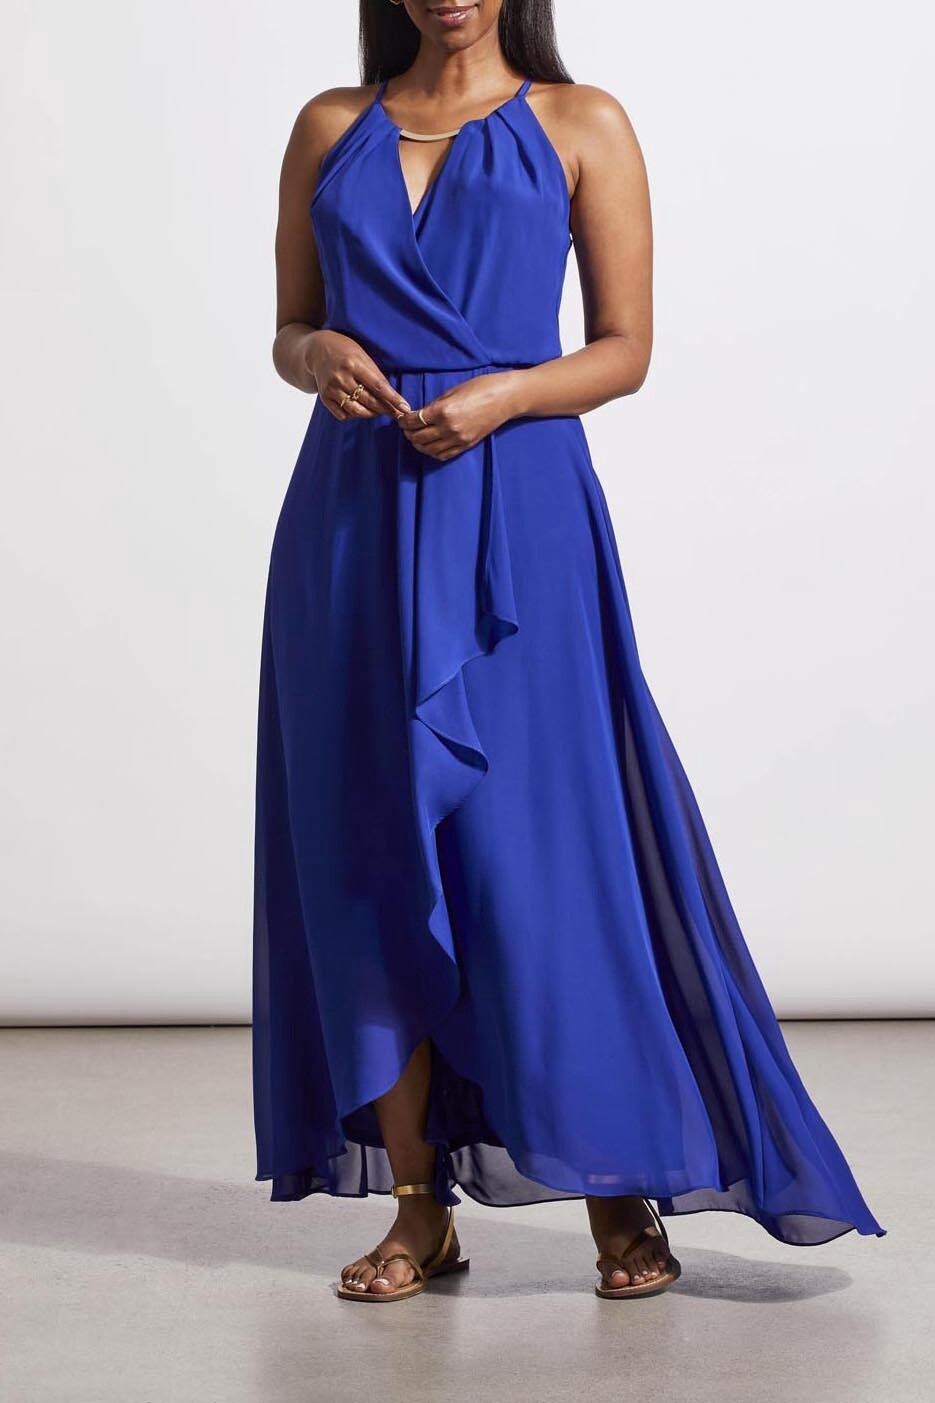 Maxi Dress in royal blue # 8790